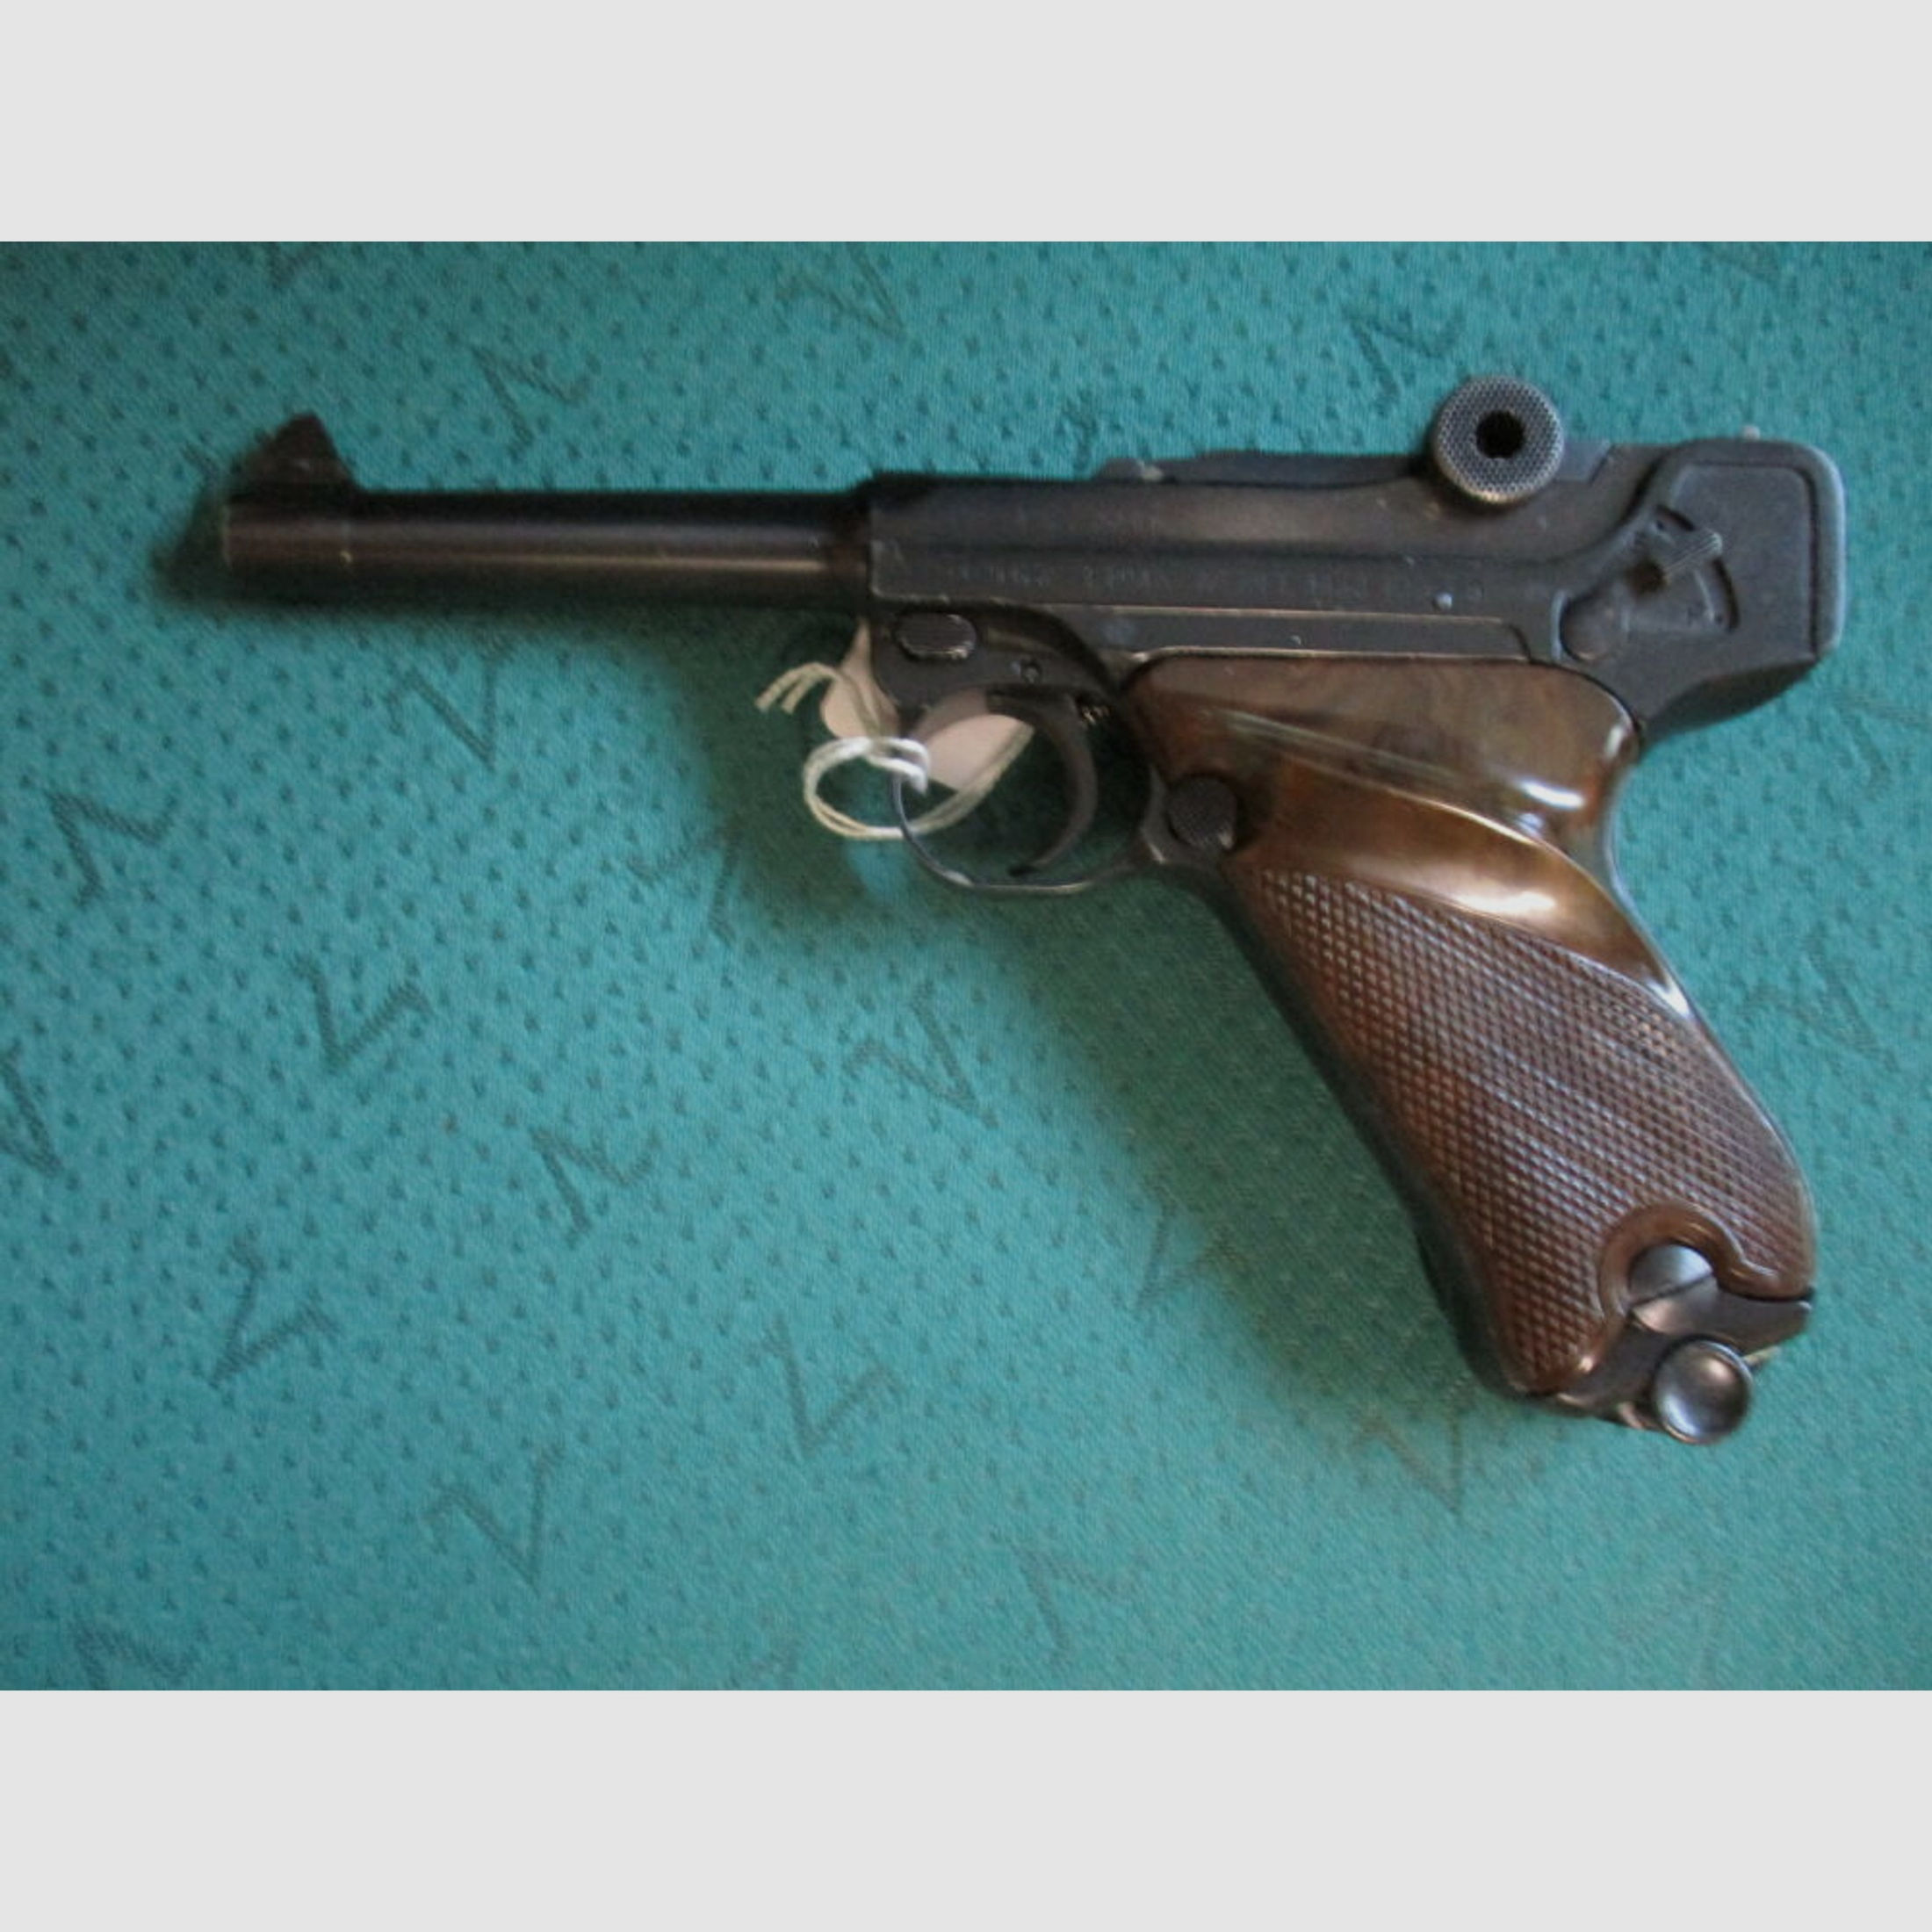 Pistole Erma KGP69 08 in .22lr Nachbau	 KGP69